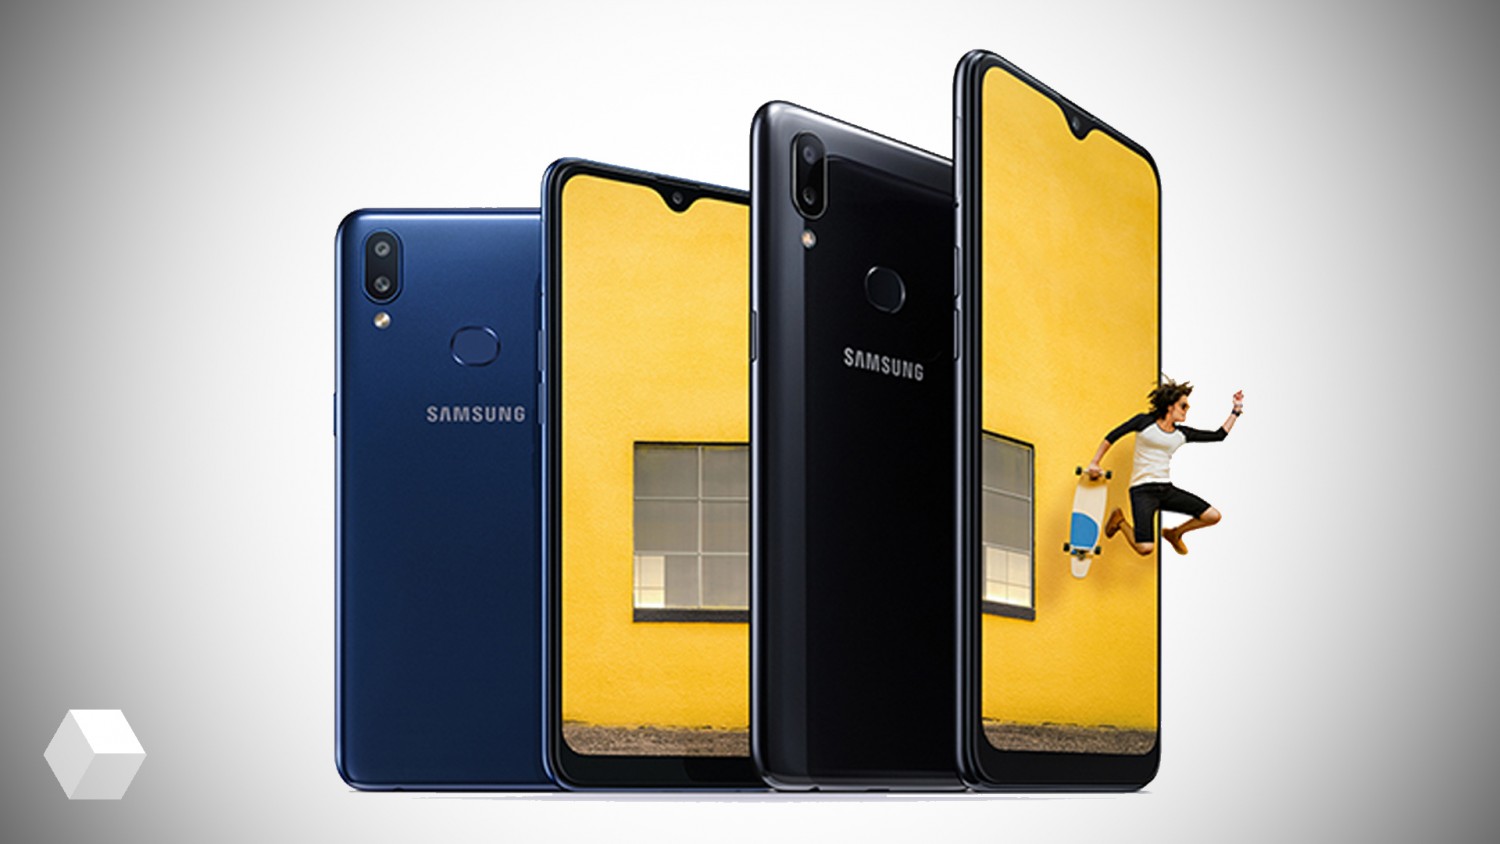 Samsung Galaxy A10s: бюджетник с дисплеем HD+ и аккумулятором на 4000 мАч